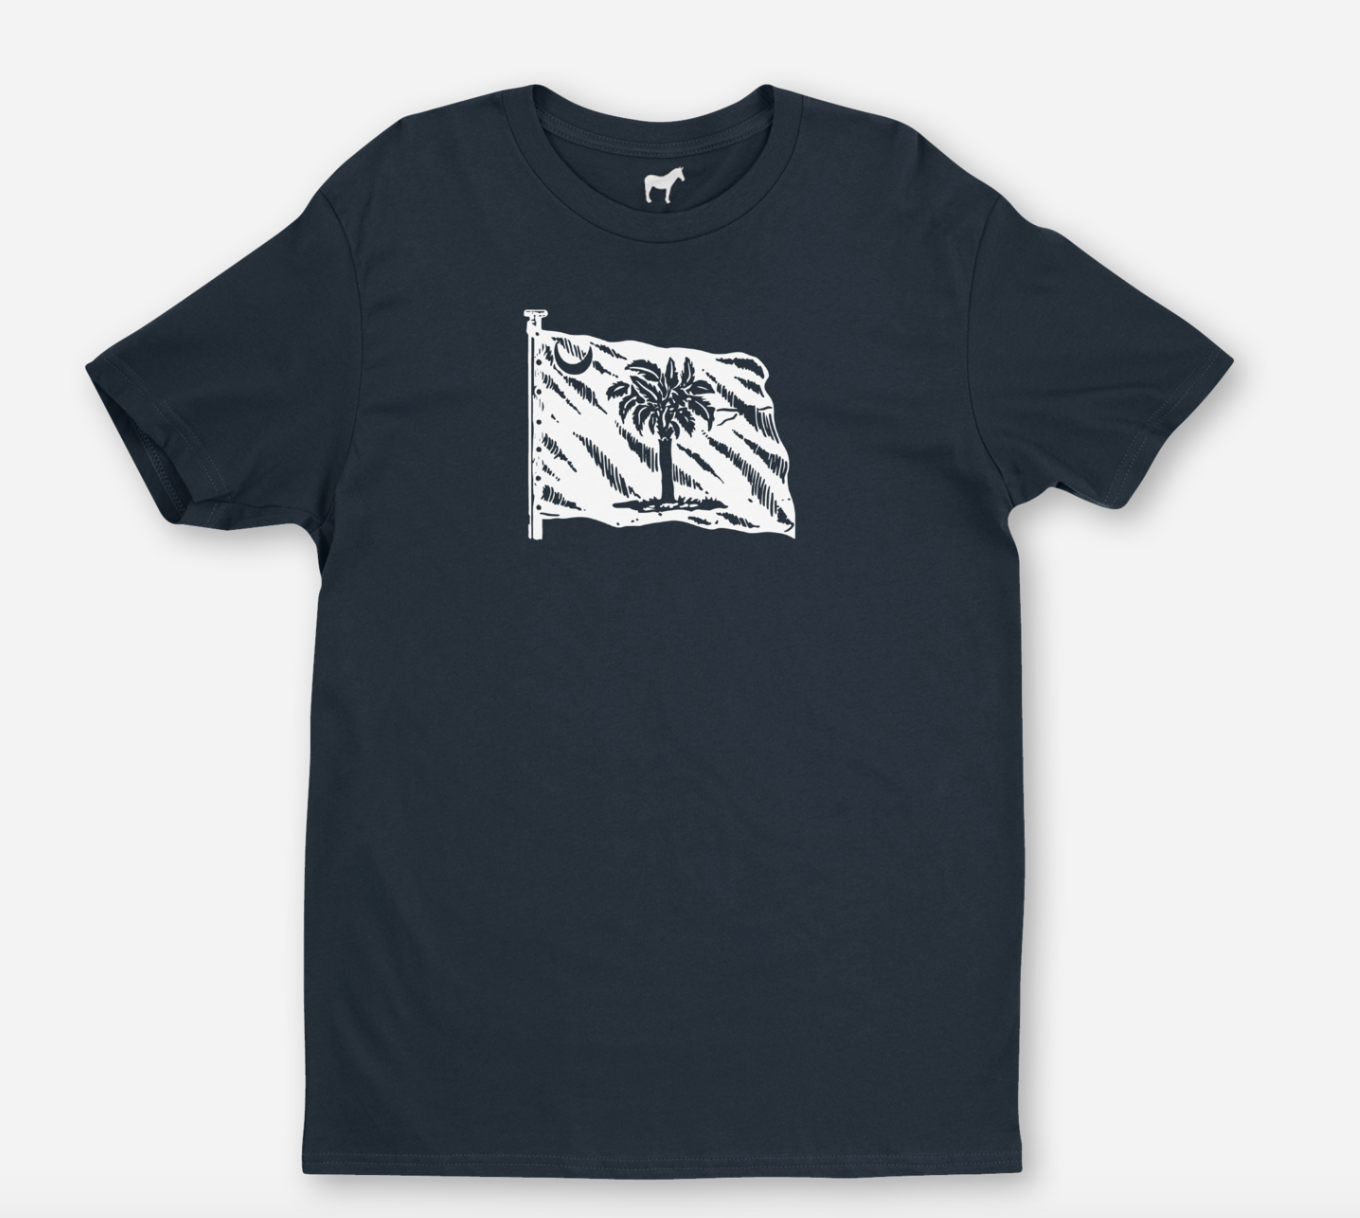 South Carolina Independence / Palmetto Republic T-Shirt